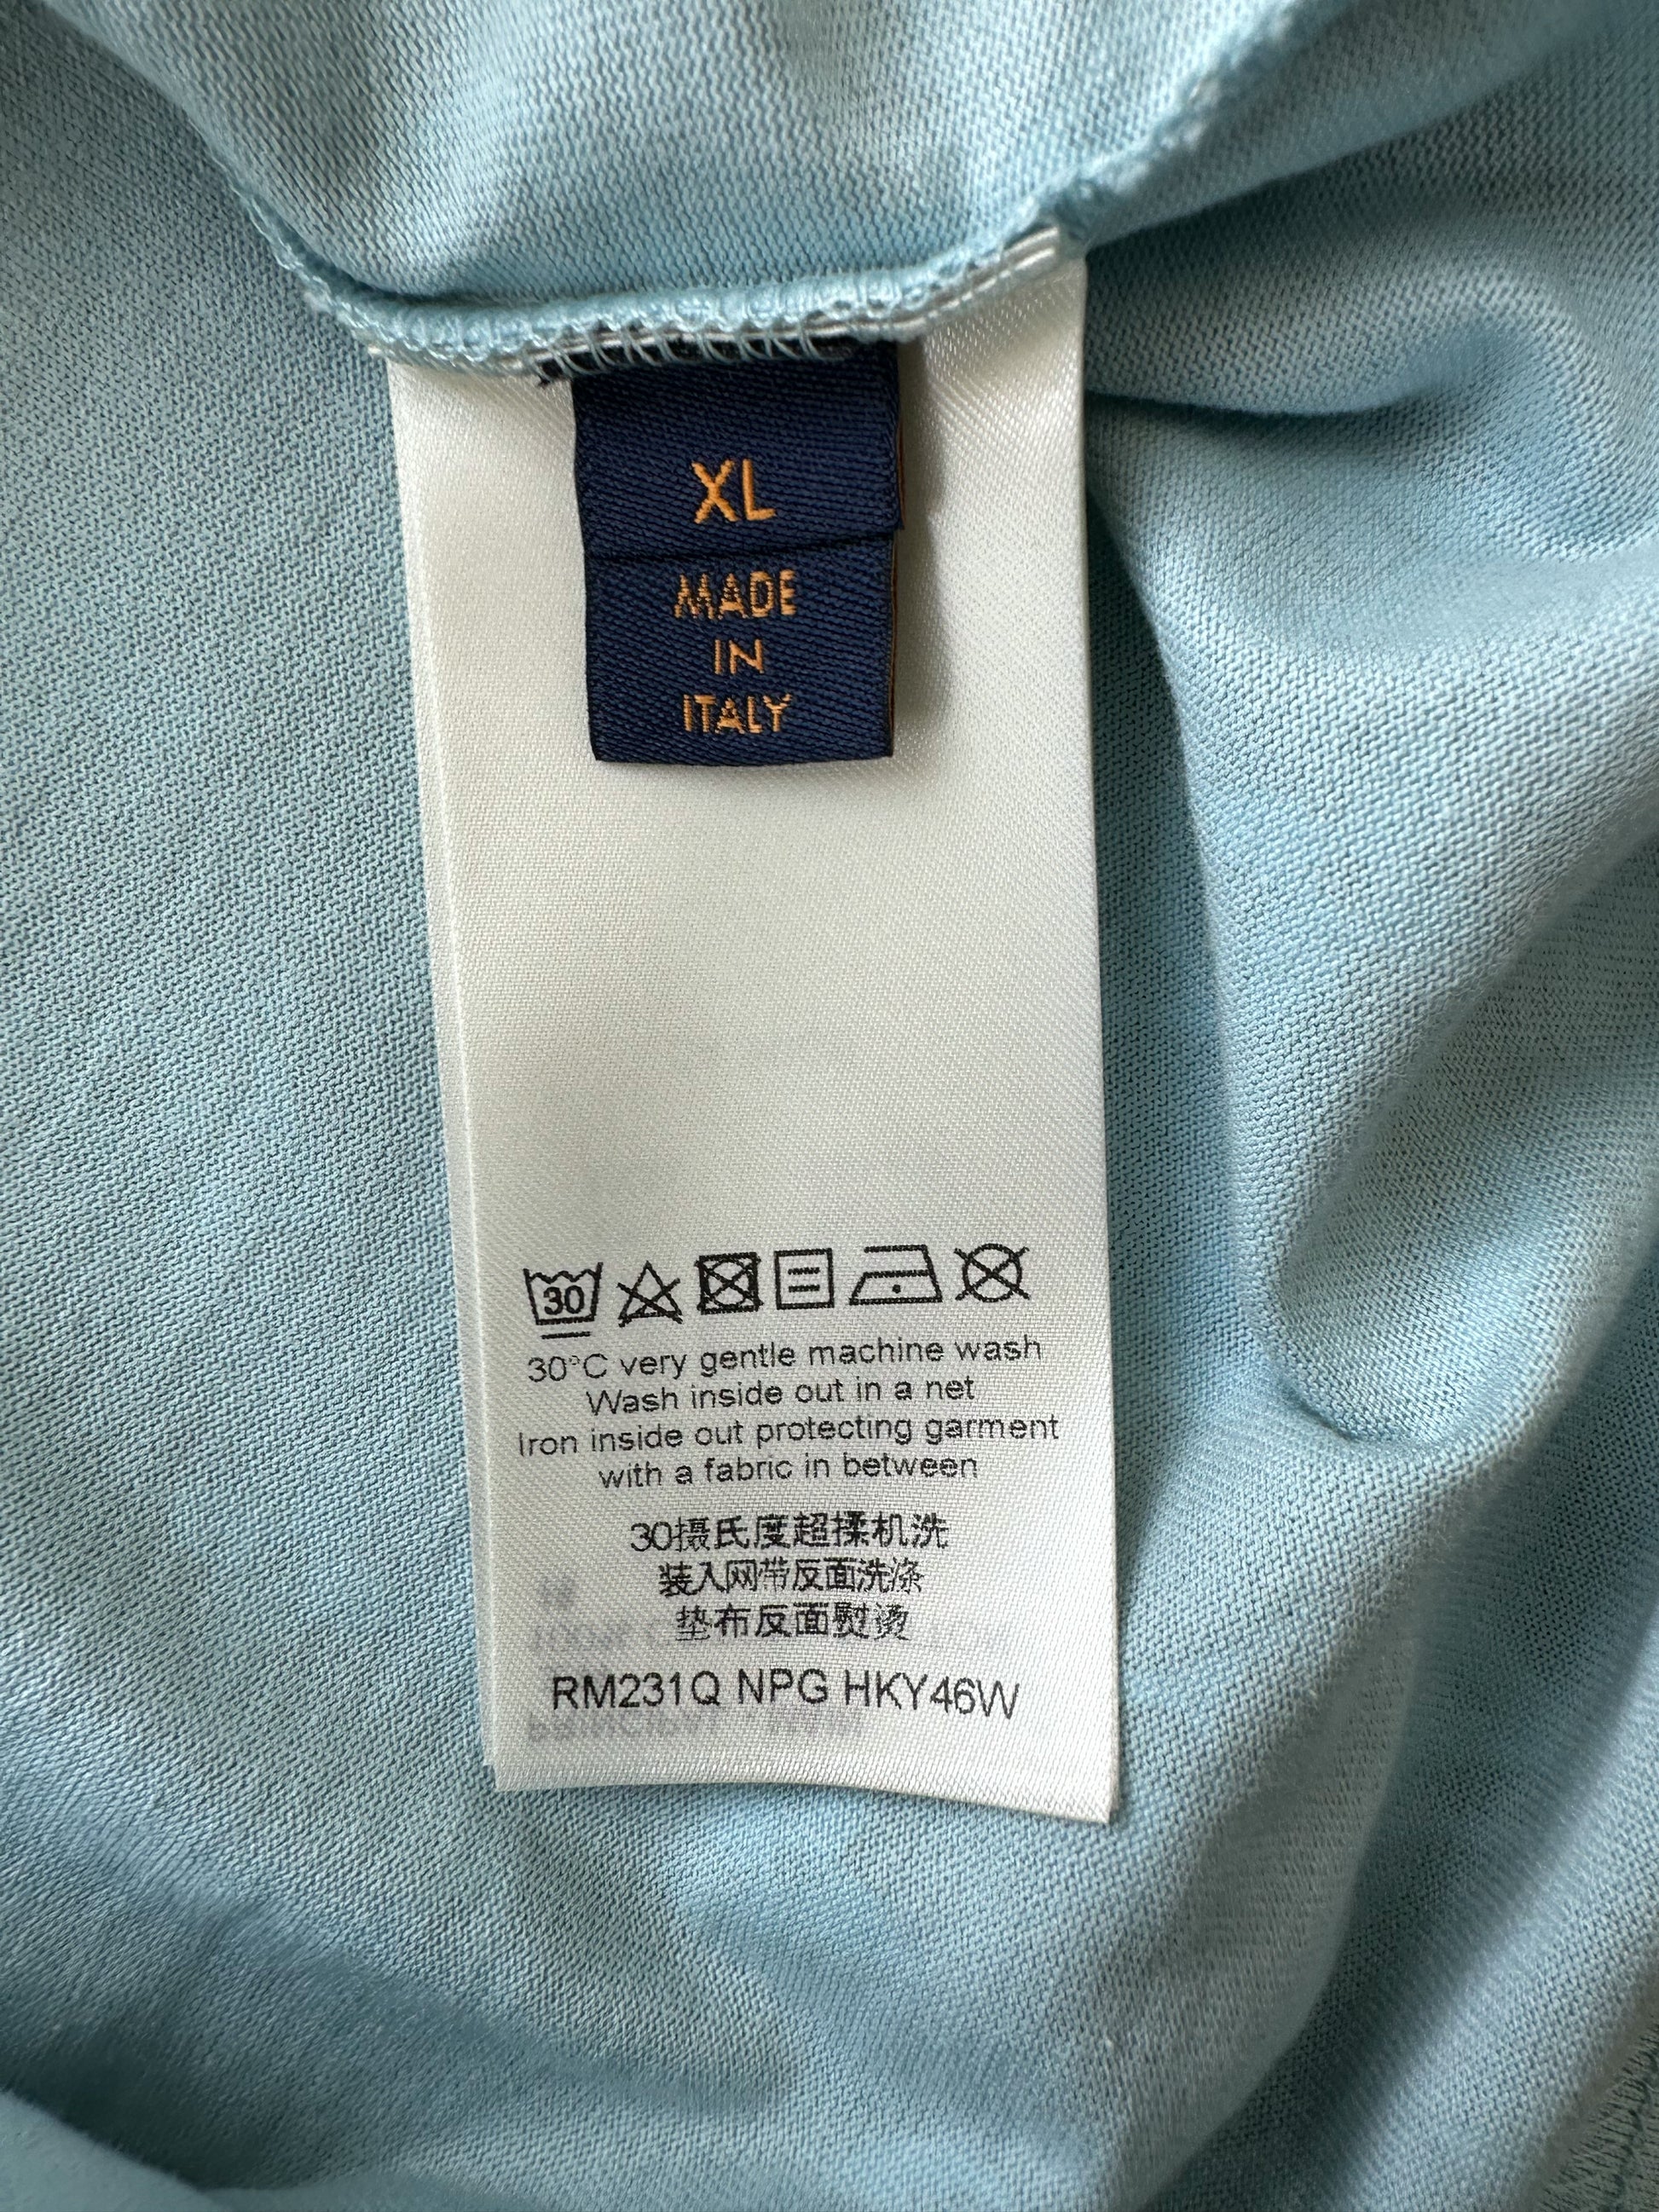 Louis Vuitton Blue, Pattern Print 2021 Monogram Gradient T-shirts